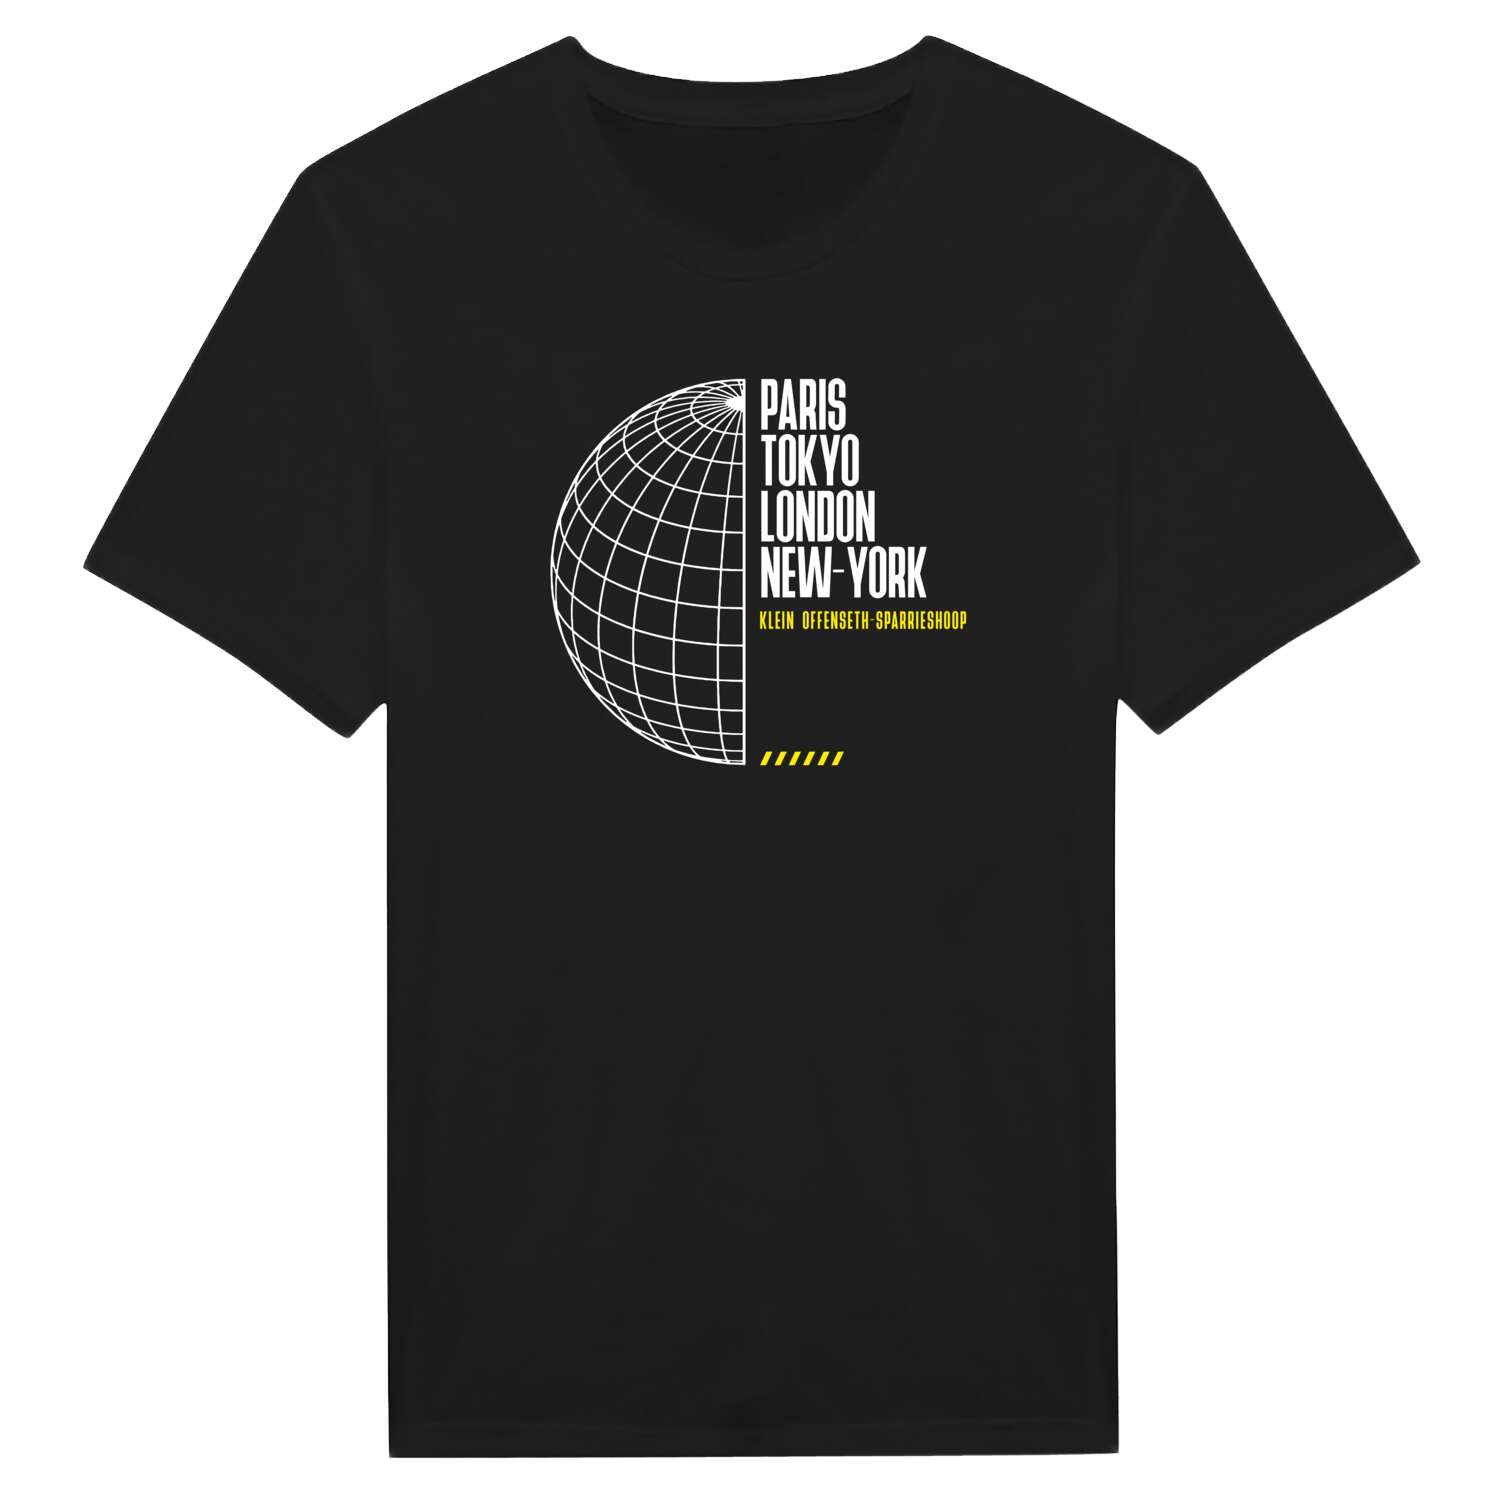 Klein Offenseth-Sparrieshoop T-Shirt »Paris Tokyo London«